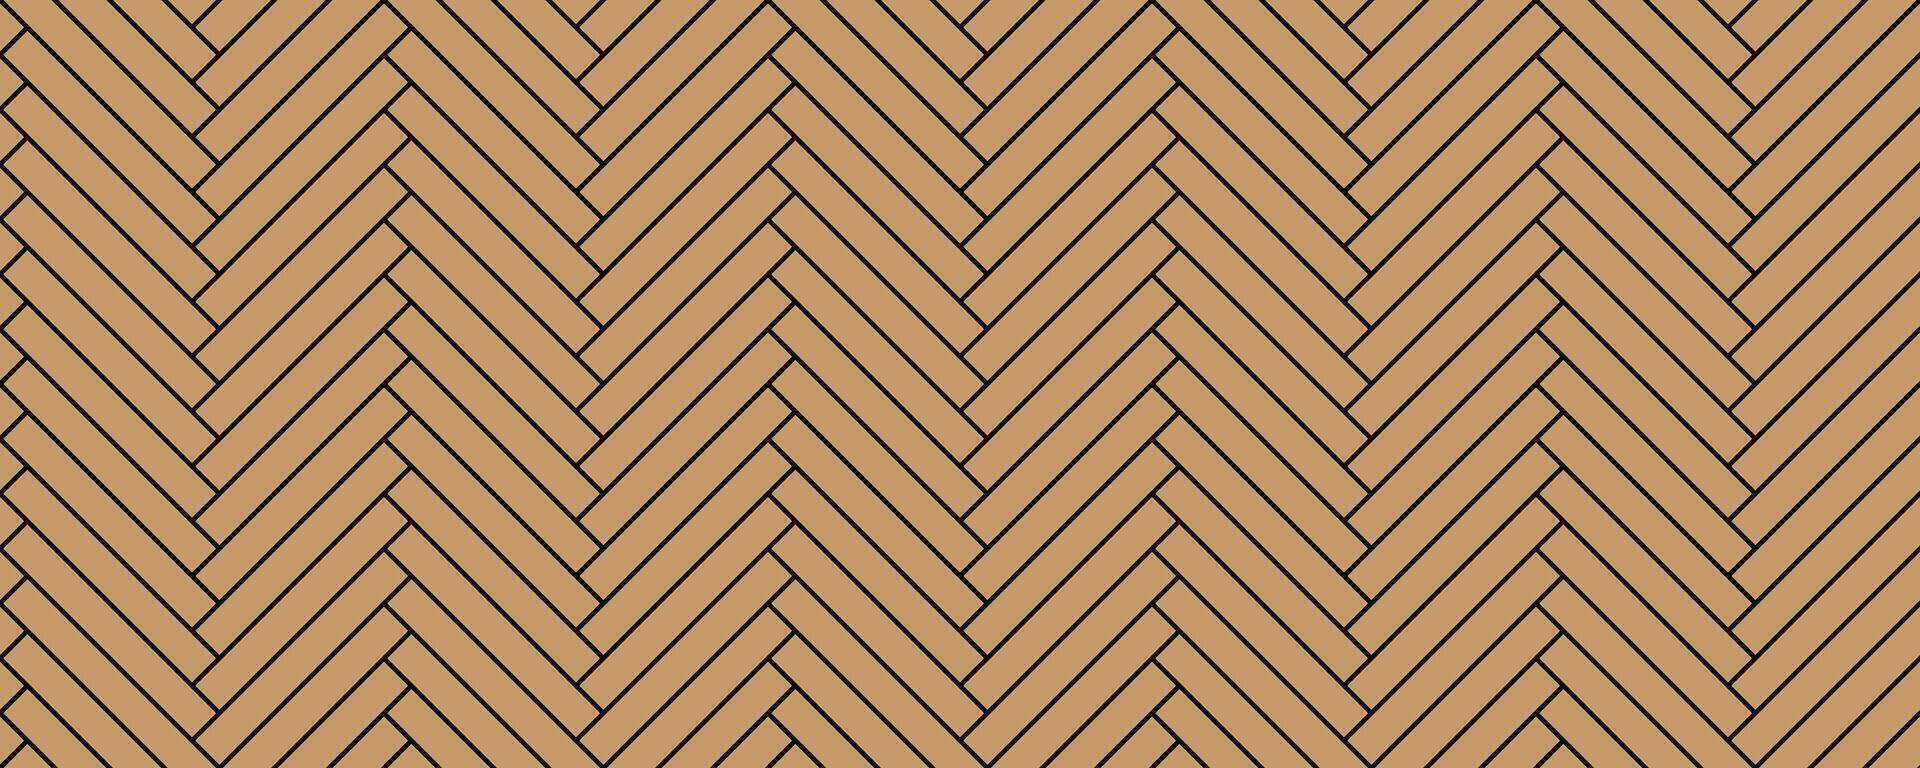 brown herringbone parquet seamless pattern vector